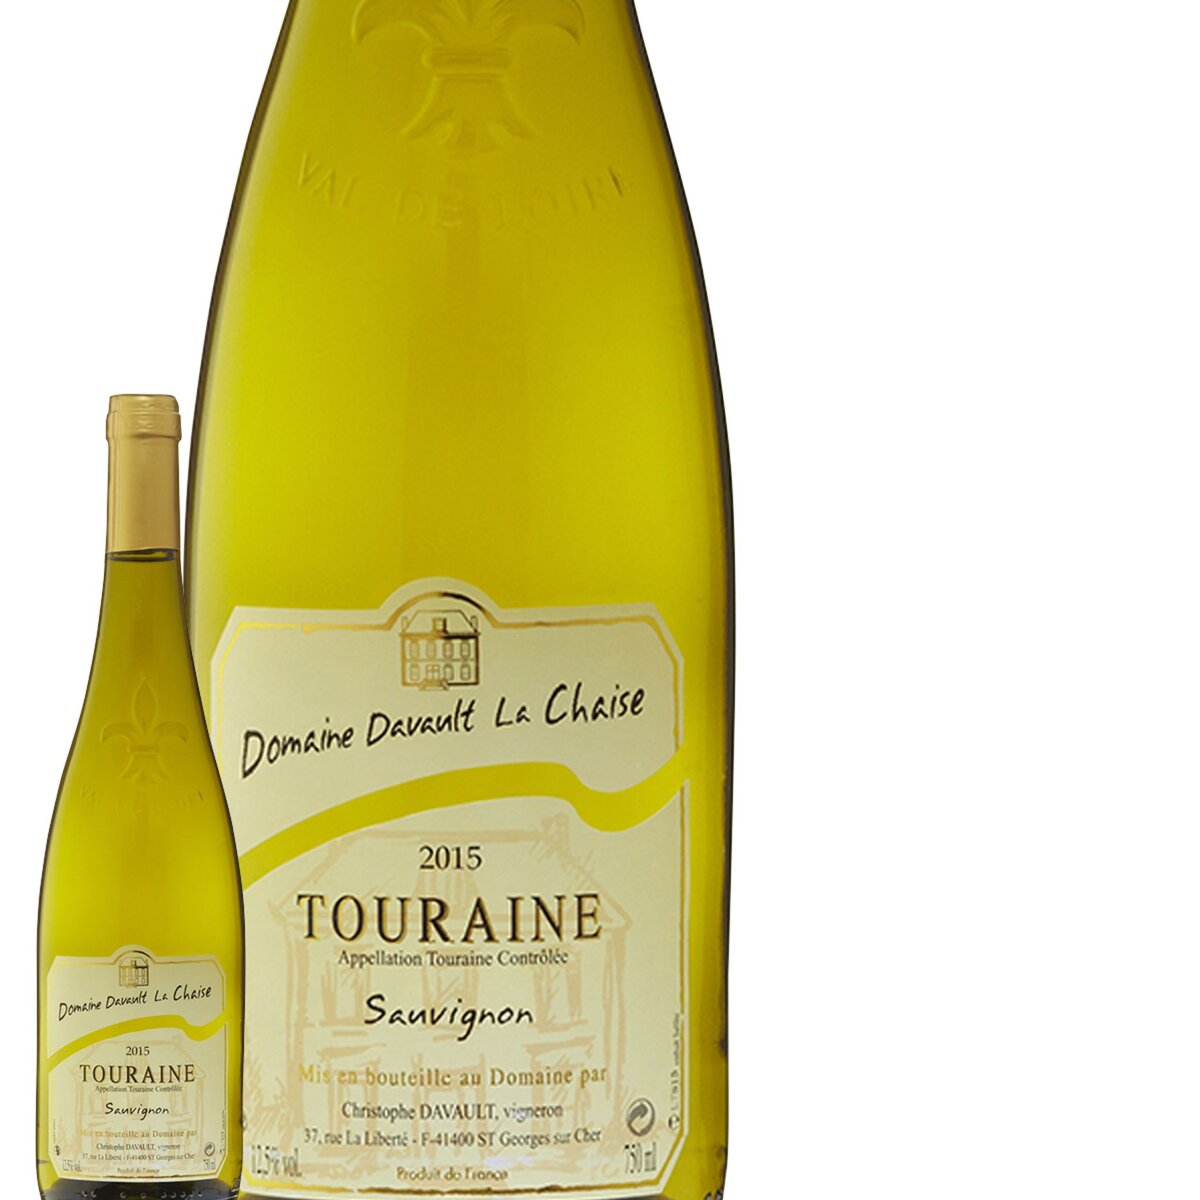 Domaine Davault la Chaise Touraine Sauvignon Blanc 2015